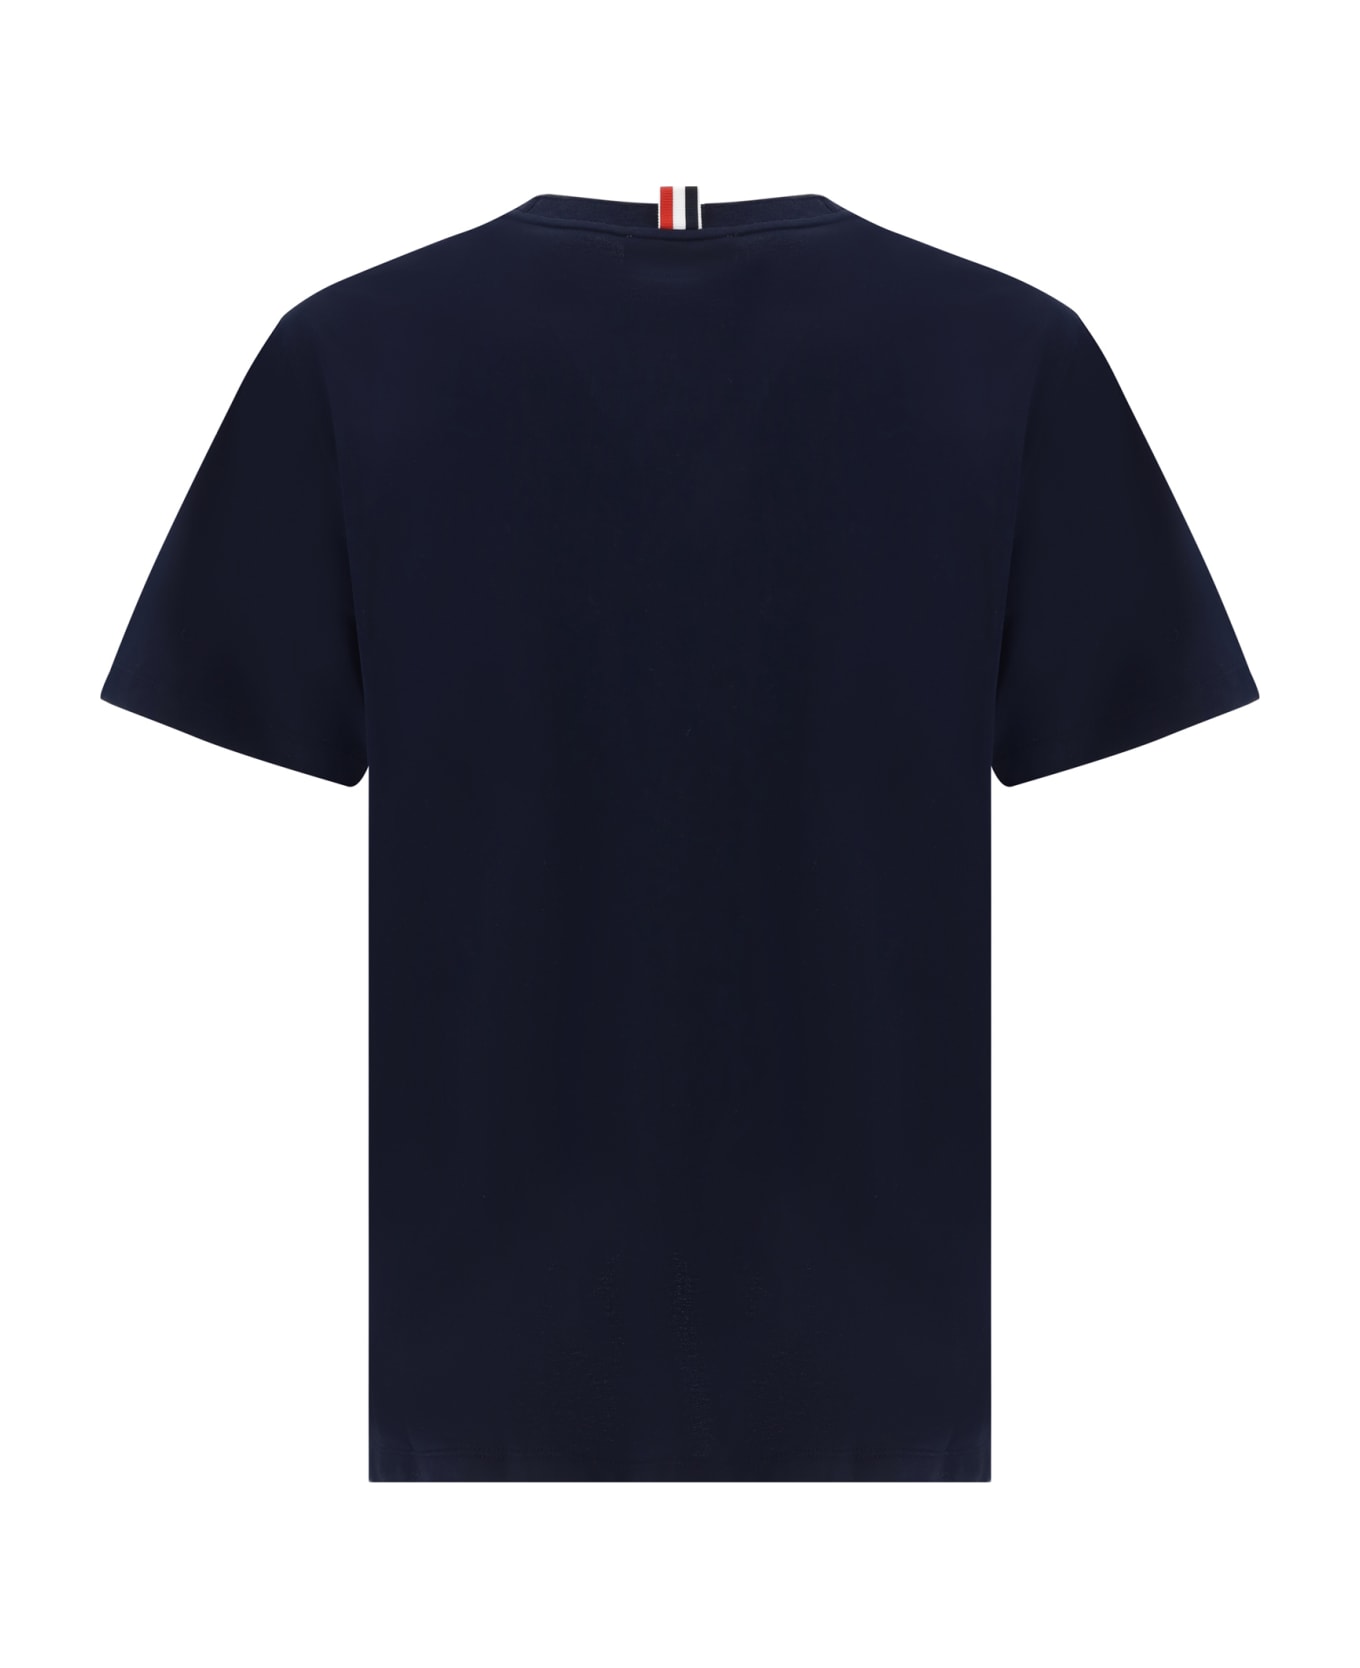 Thom Browne T-shirt - Navy